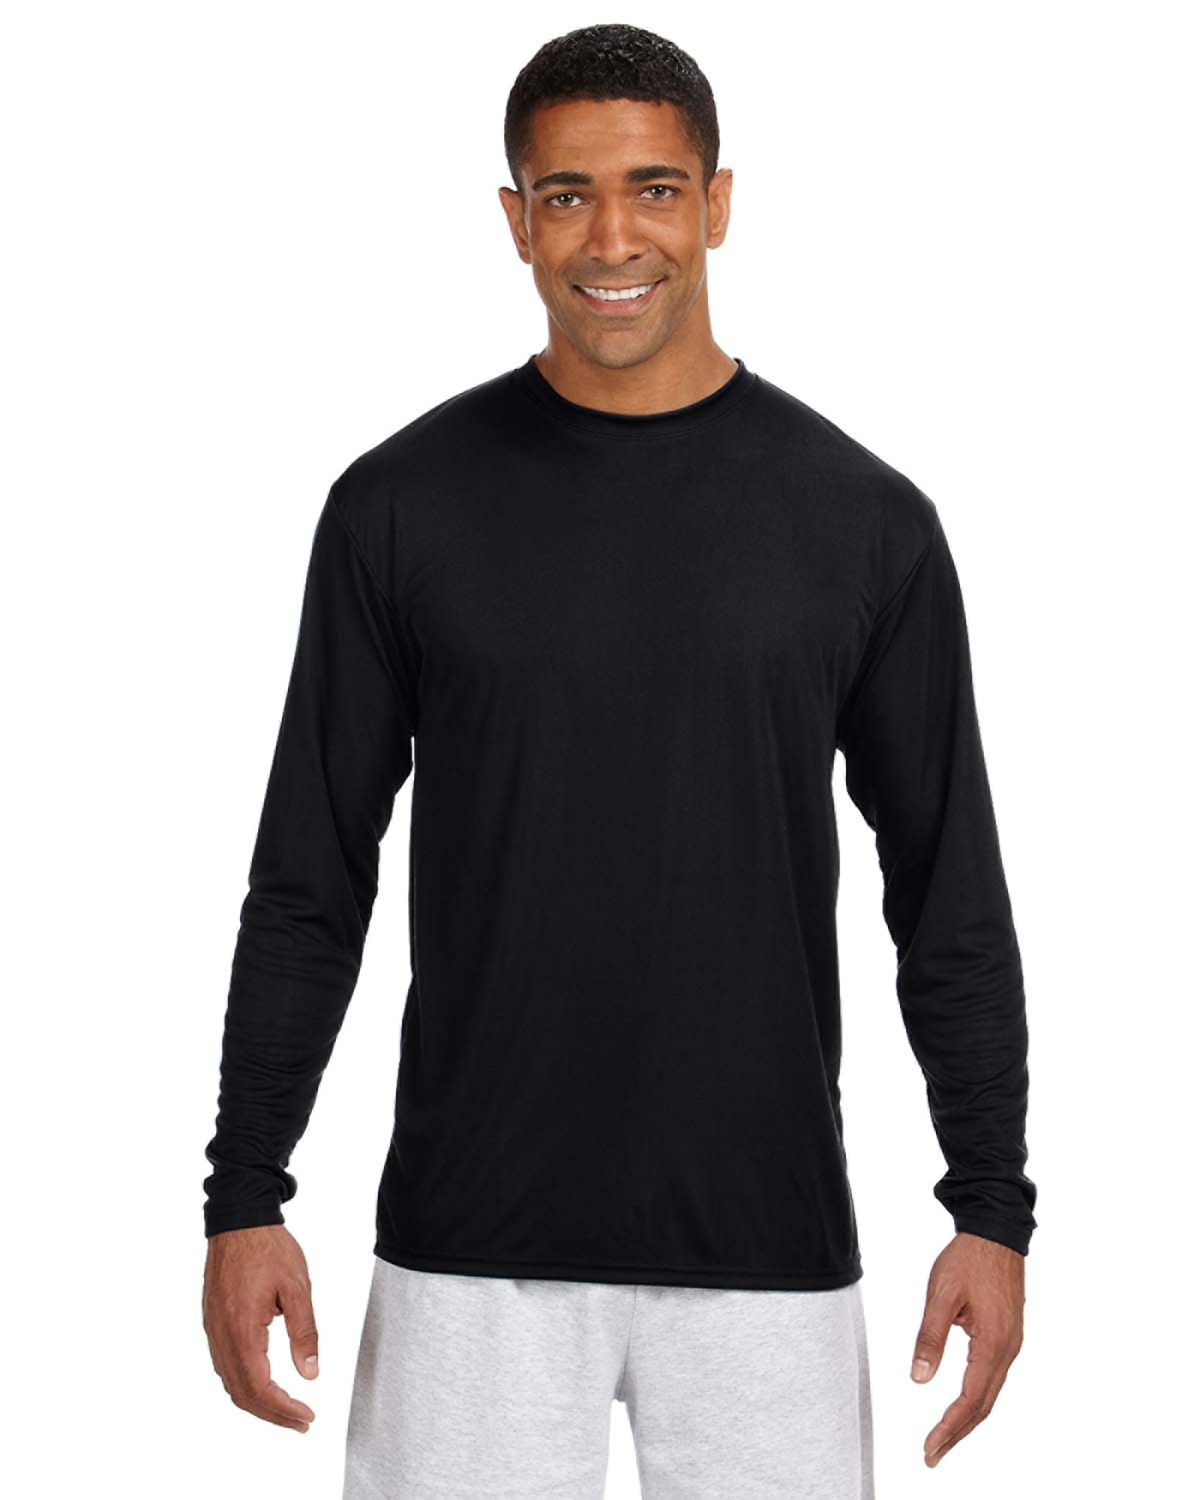 A4 N3165 Men's Cooling Performance Long Sleeve T-Shirt - Black - 3XL